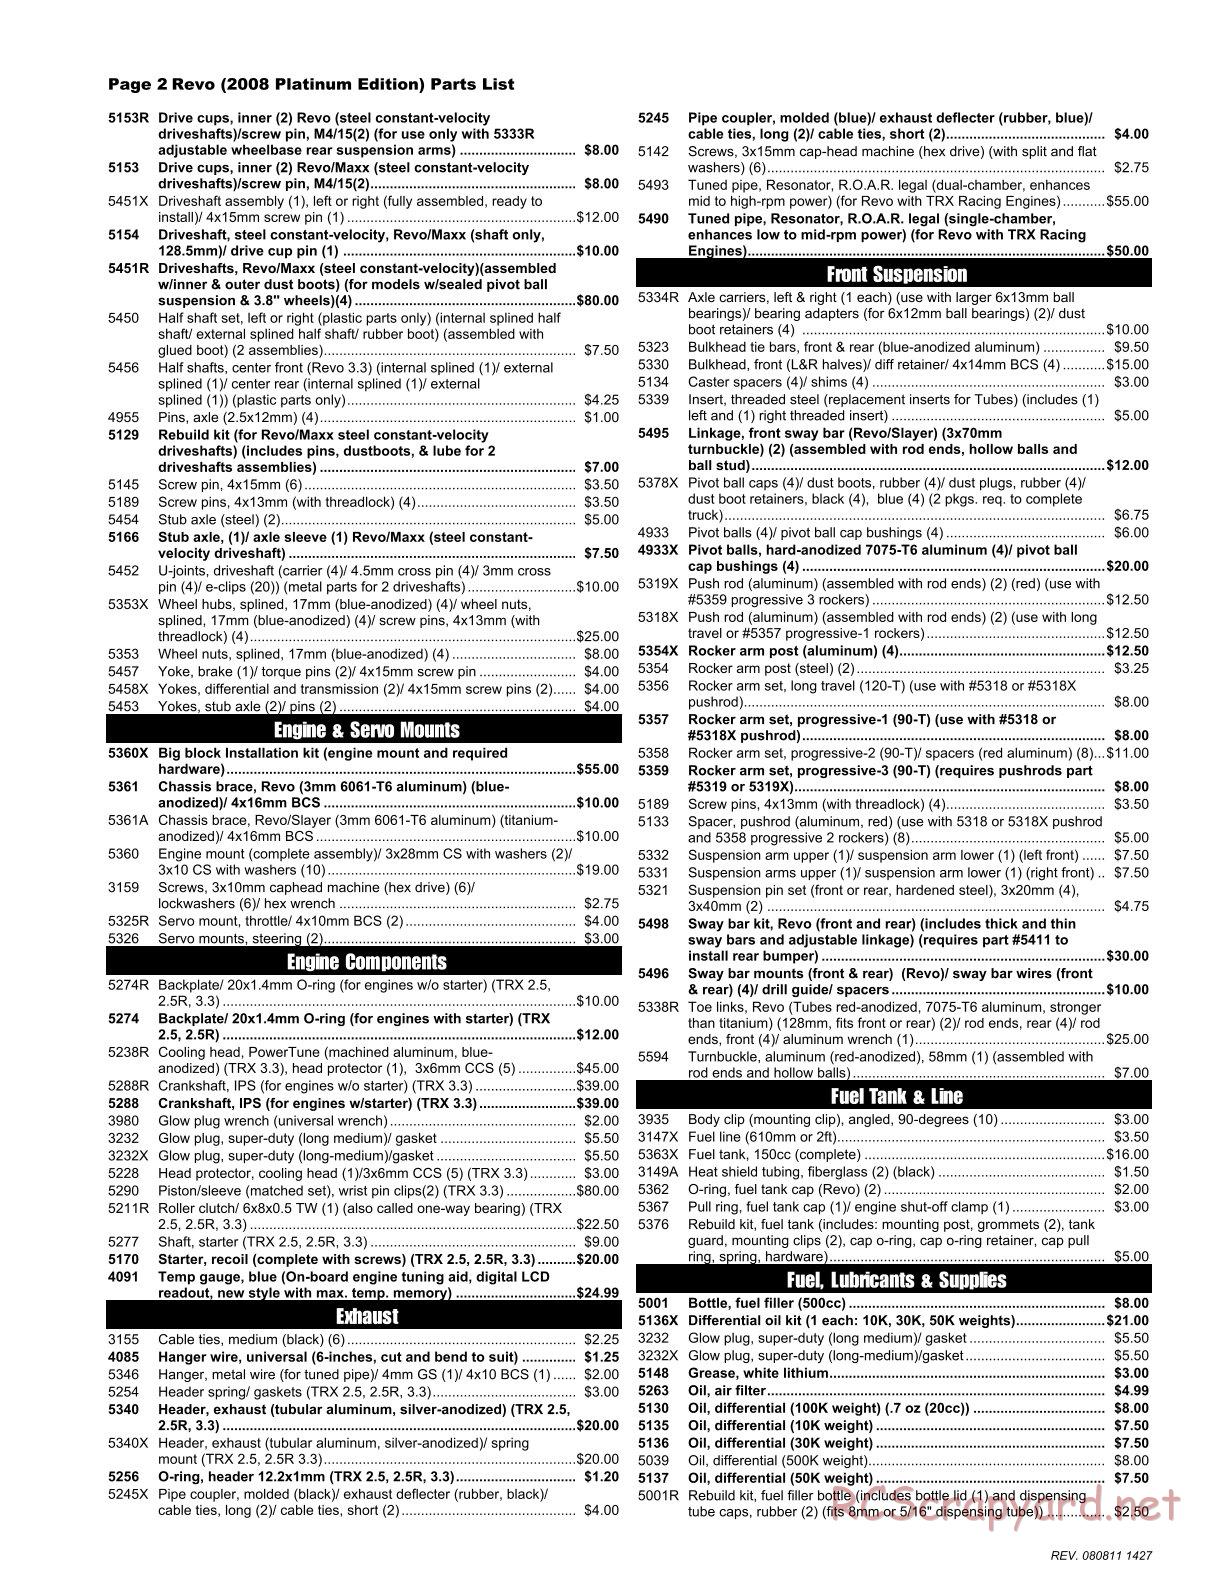 Traxxas - Revo 3.3 (2008) - Parts List - Page 2